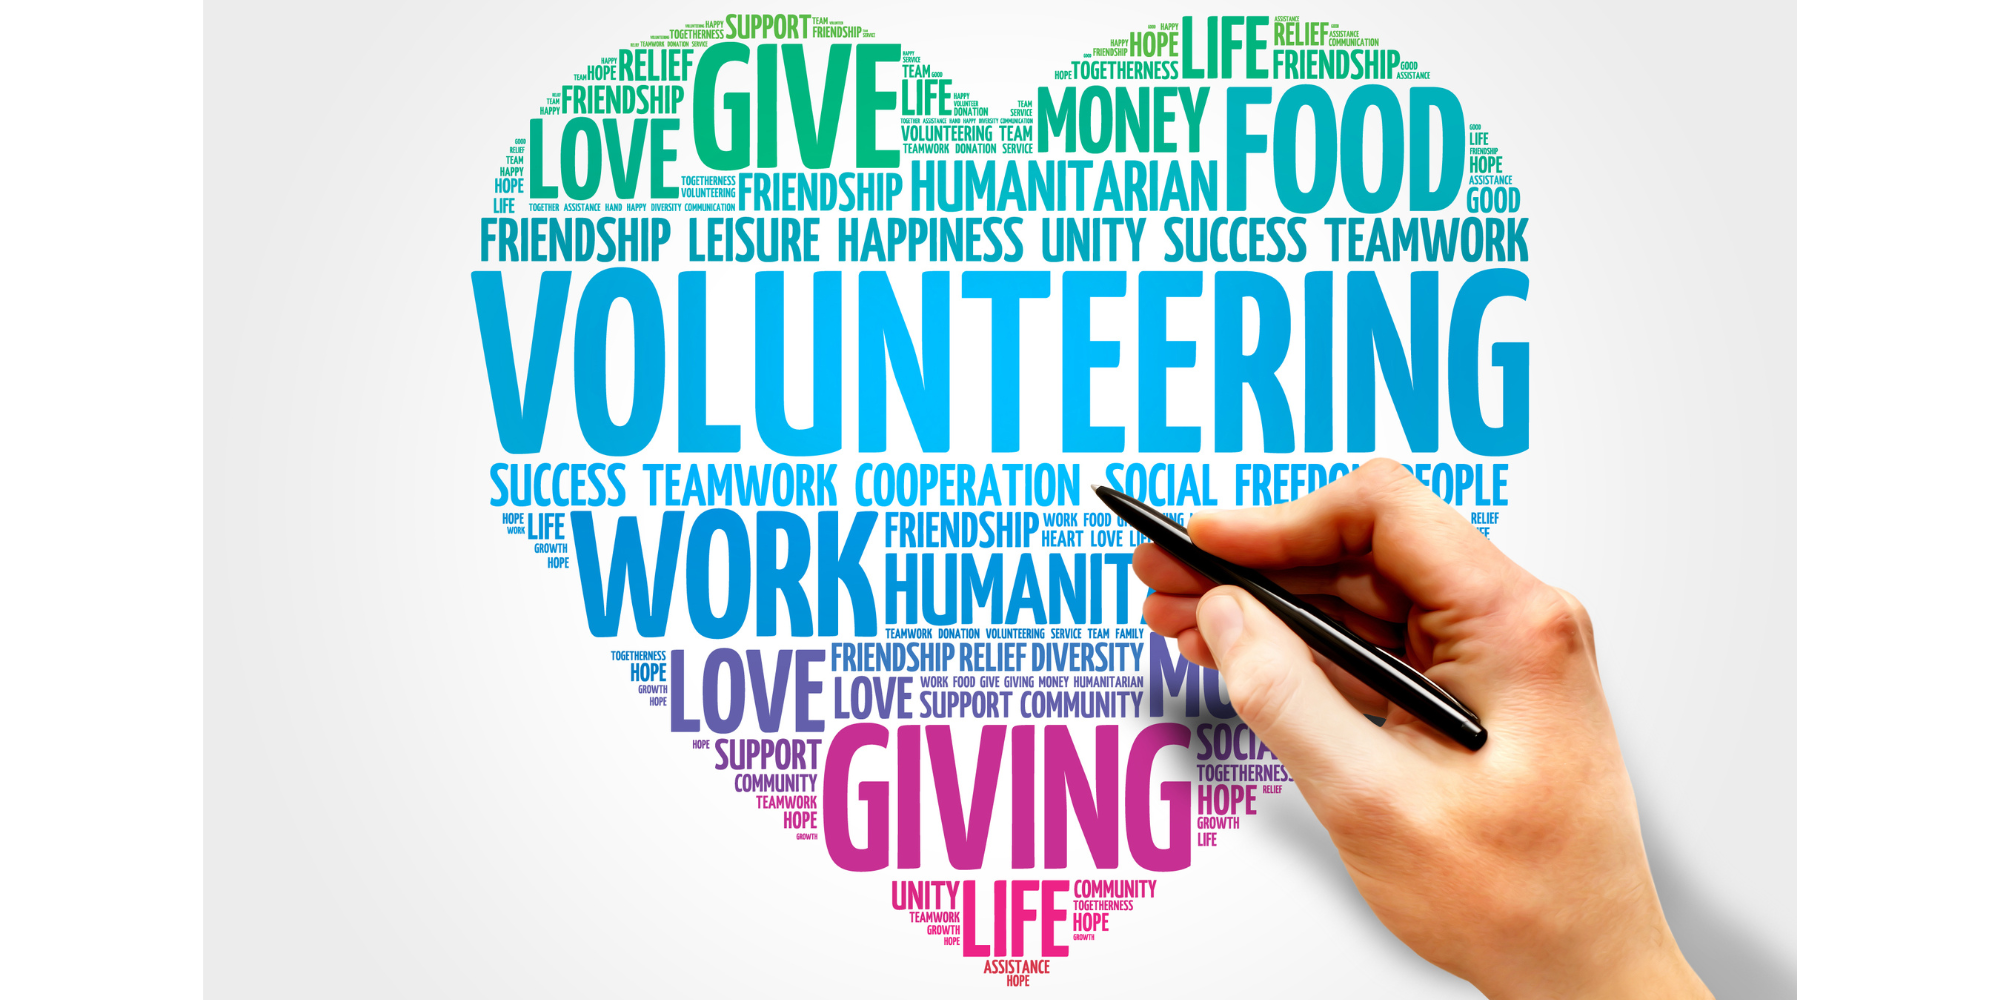 Volunteering to help others